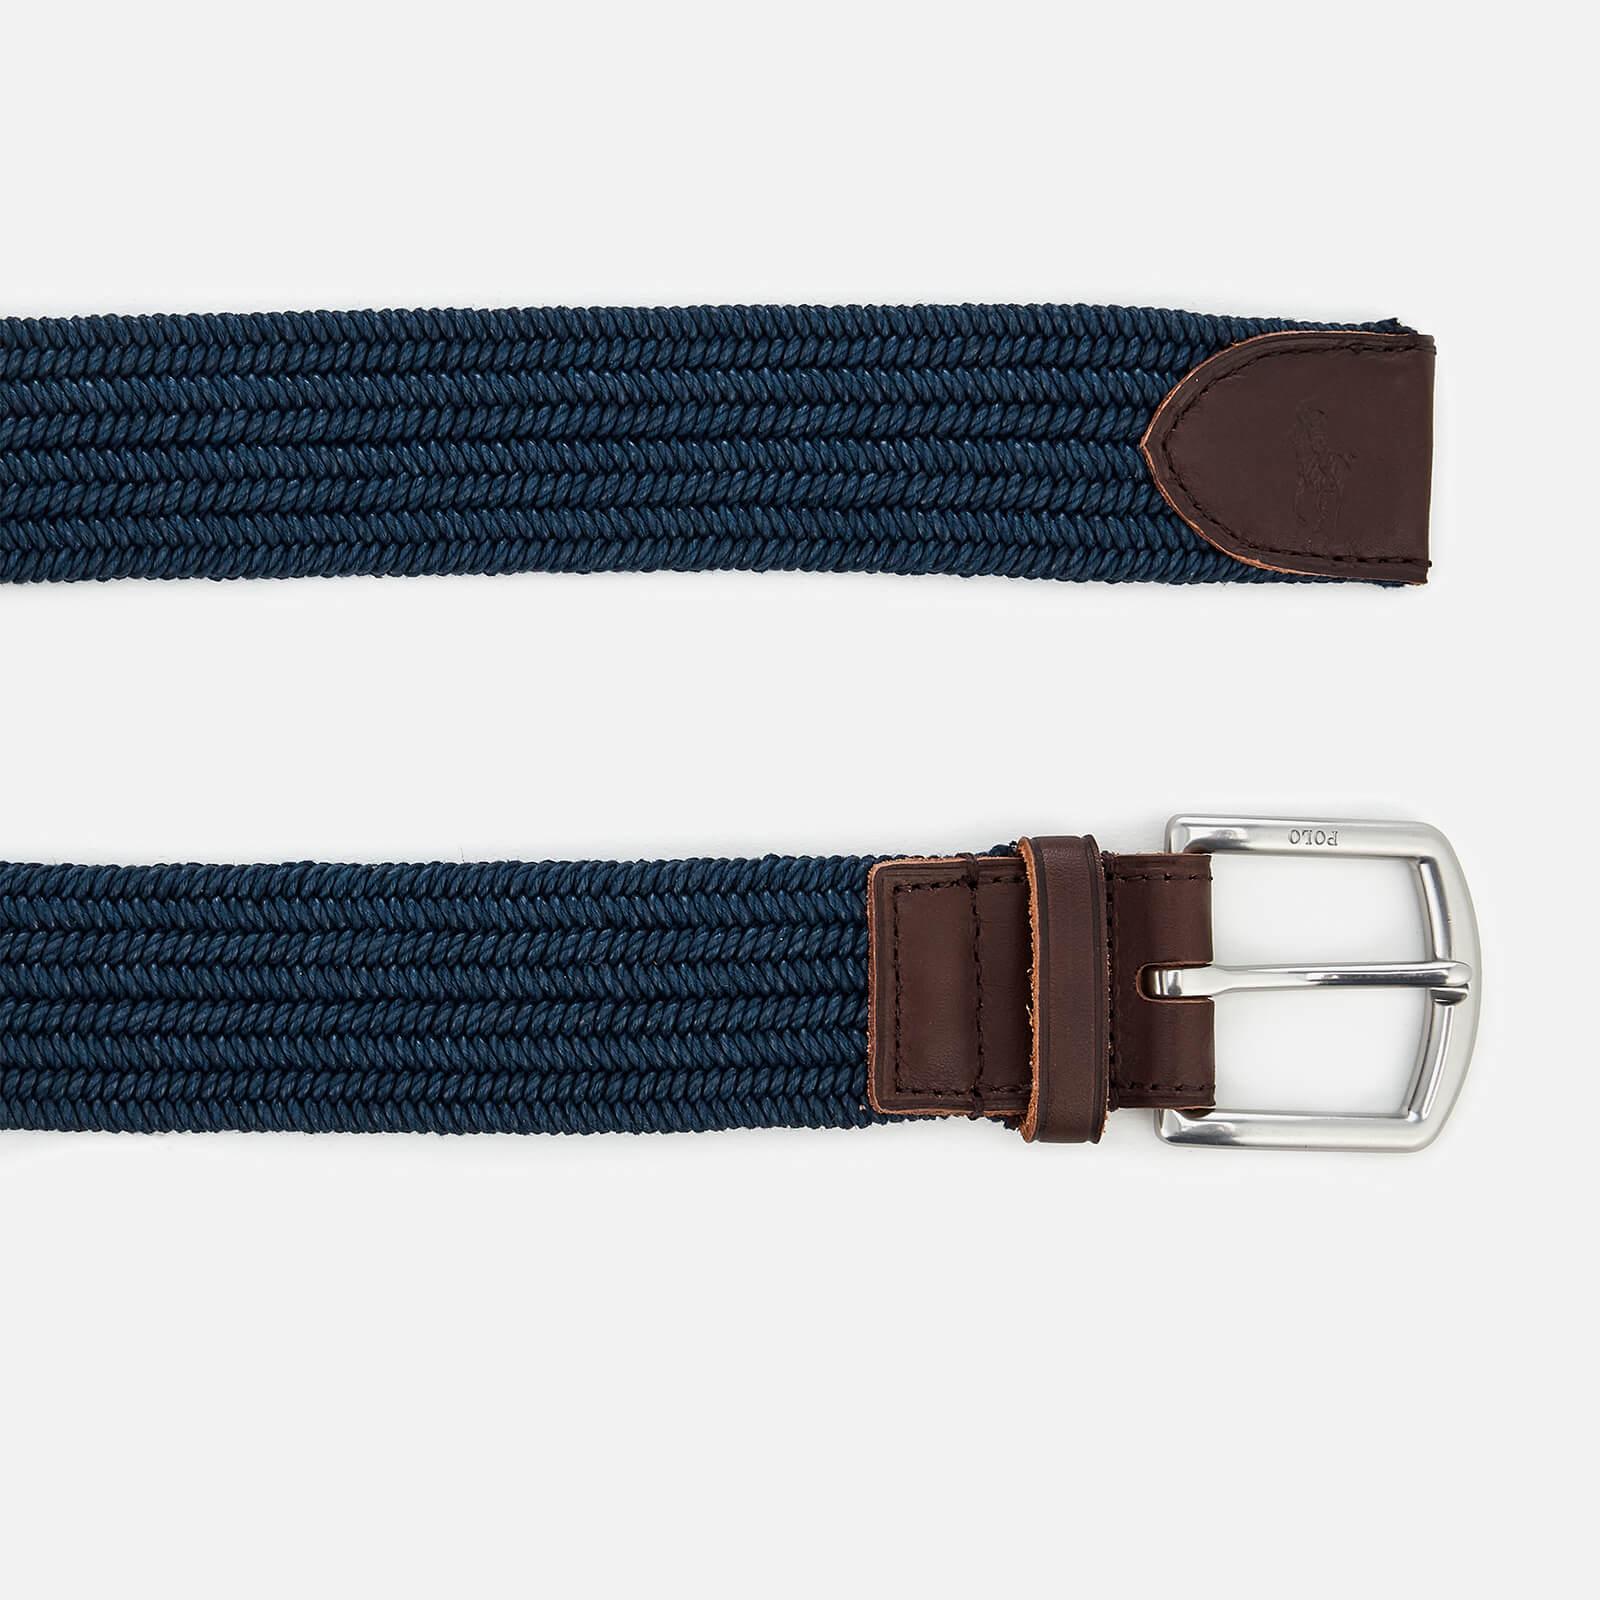 Polo Ralph Lauren Braided Fabric Stretch Belt in Blue for Men - Lyst